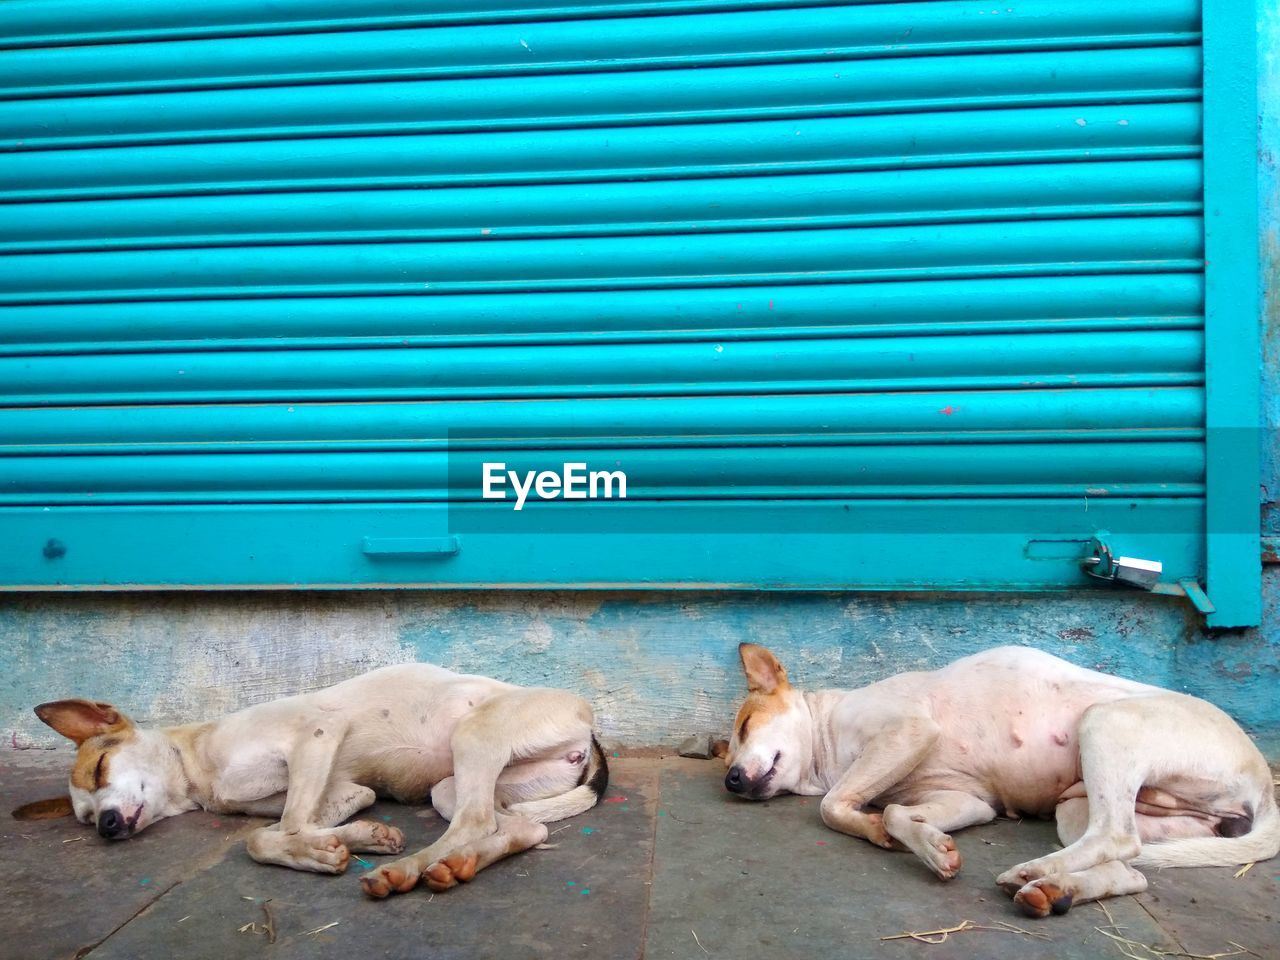 Twin dogs sleeping on closed shutter